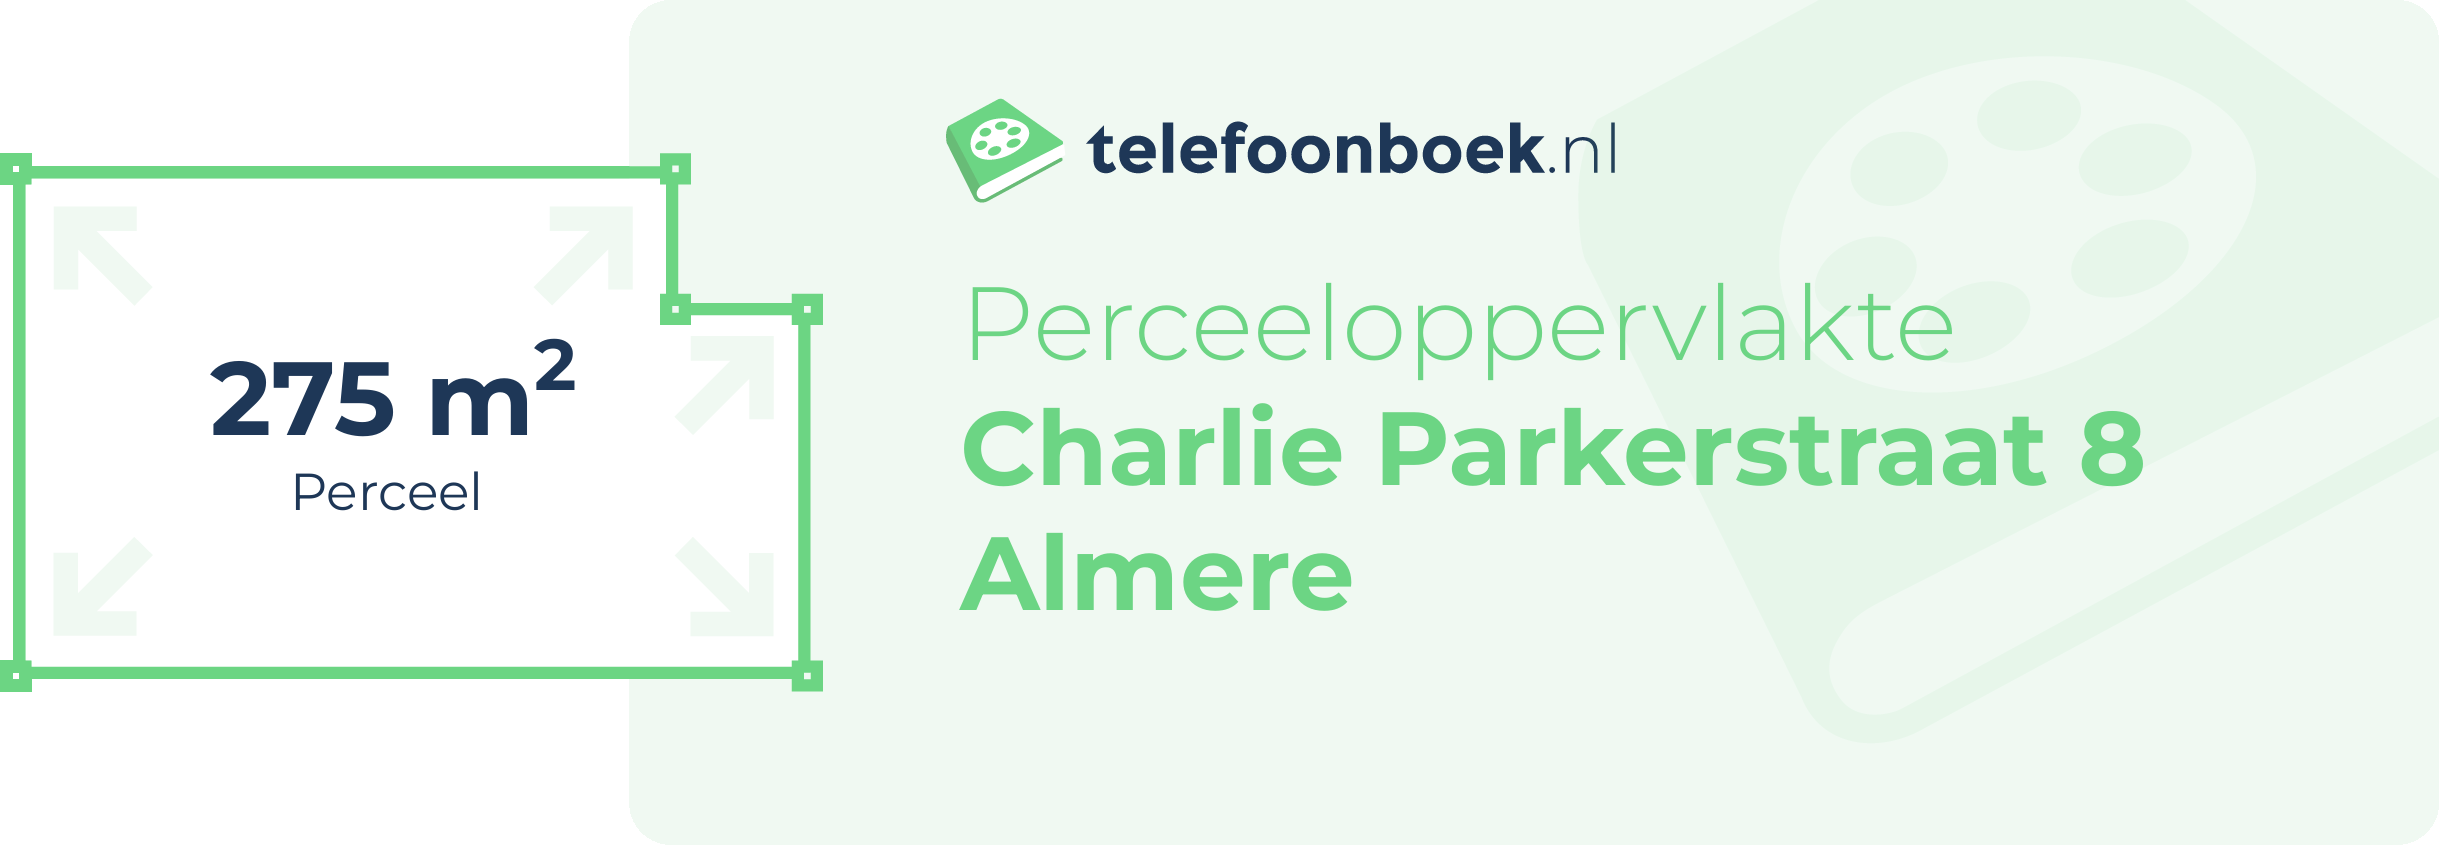 Perceeloppervlakte Charlie Parkerstraat 8 Almere